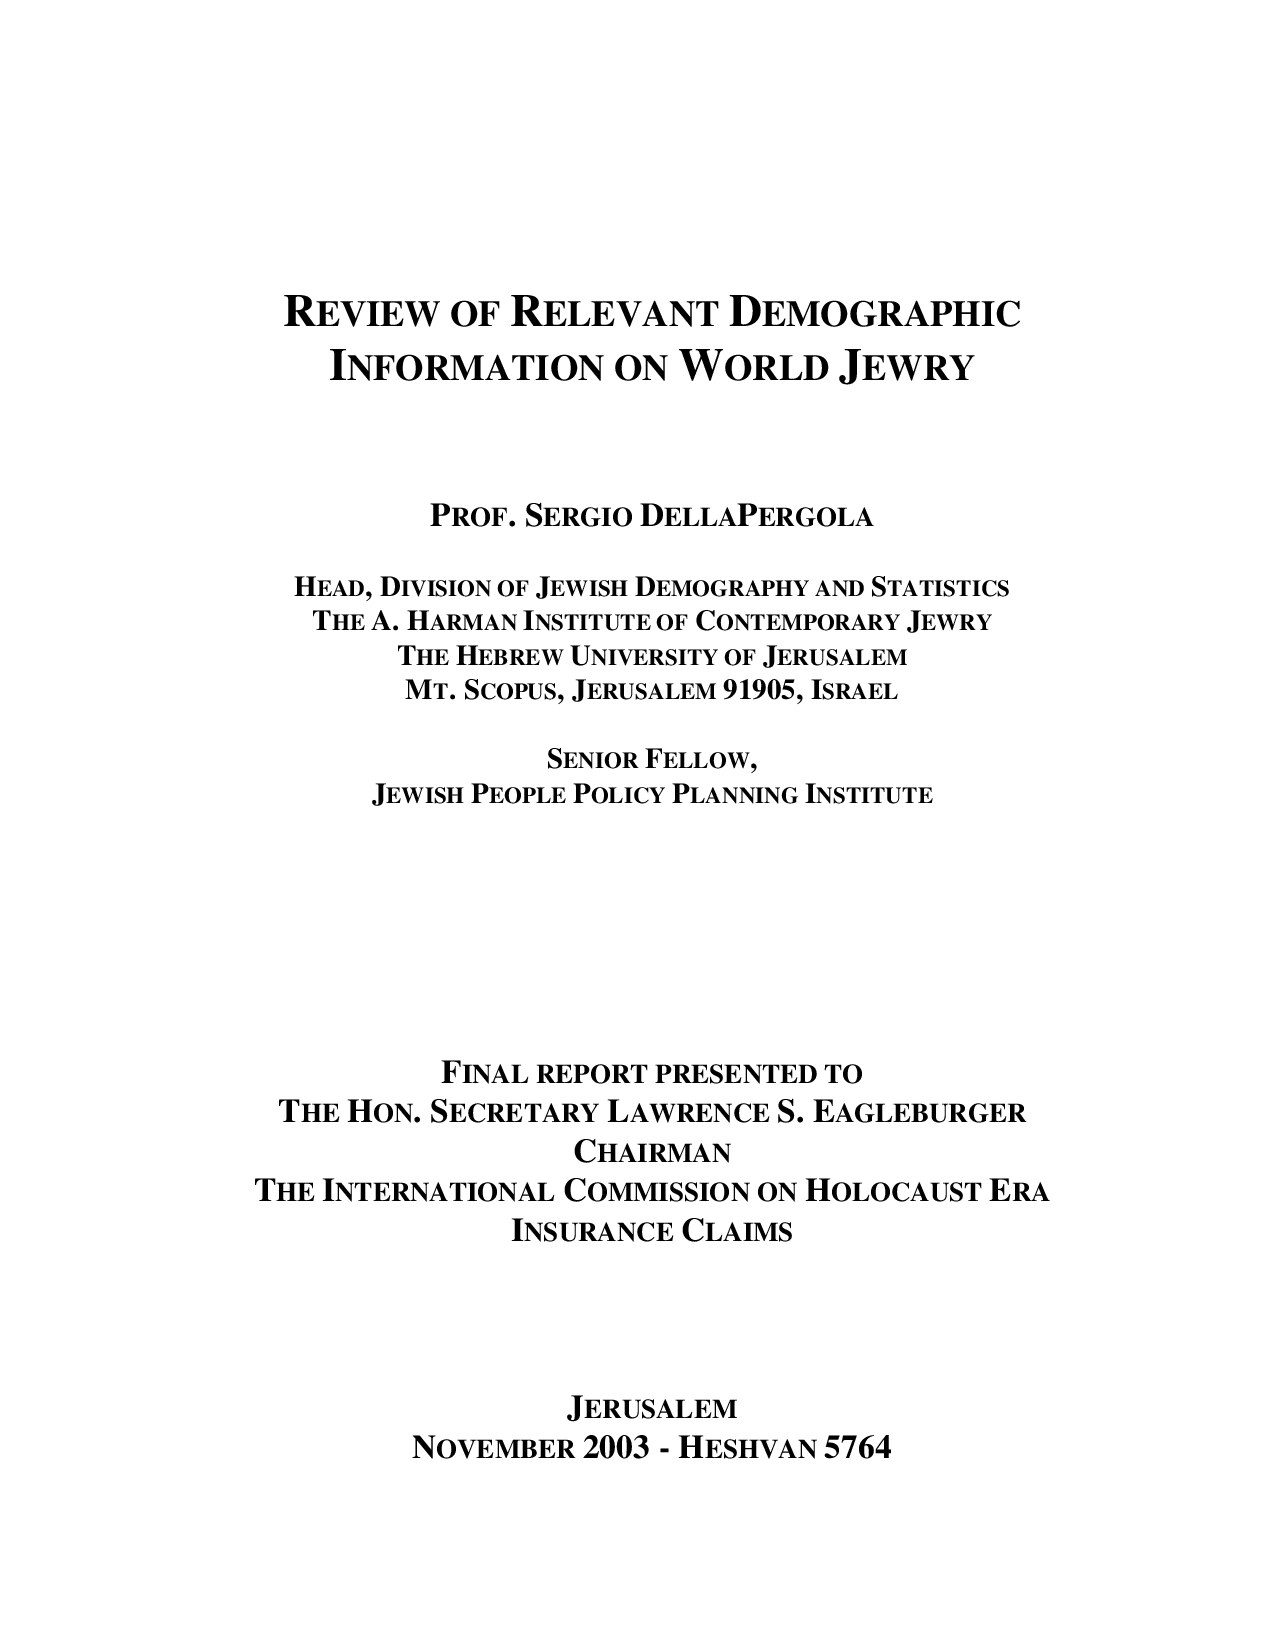 DellaPergola, Sergio; Review Of Relevant Demographic Information On World Jewry